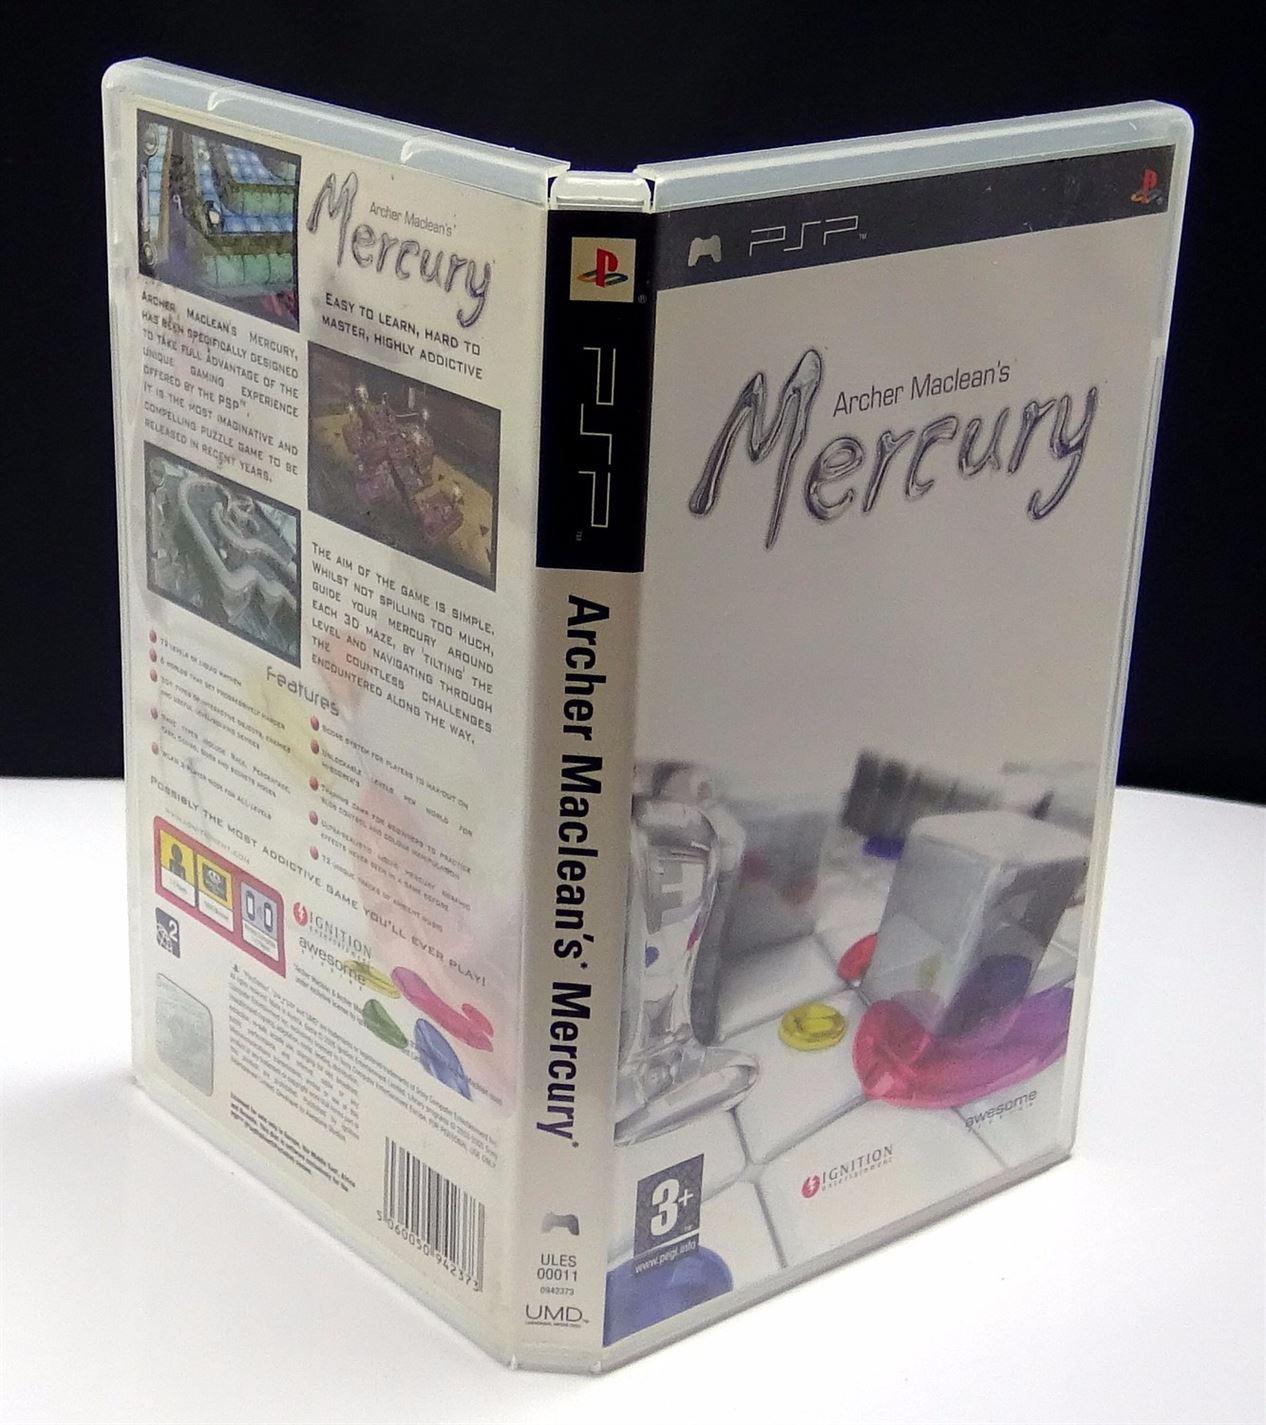 Archer Maclean's Mercury (PSP) - UK Seller